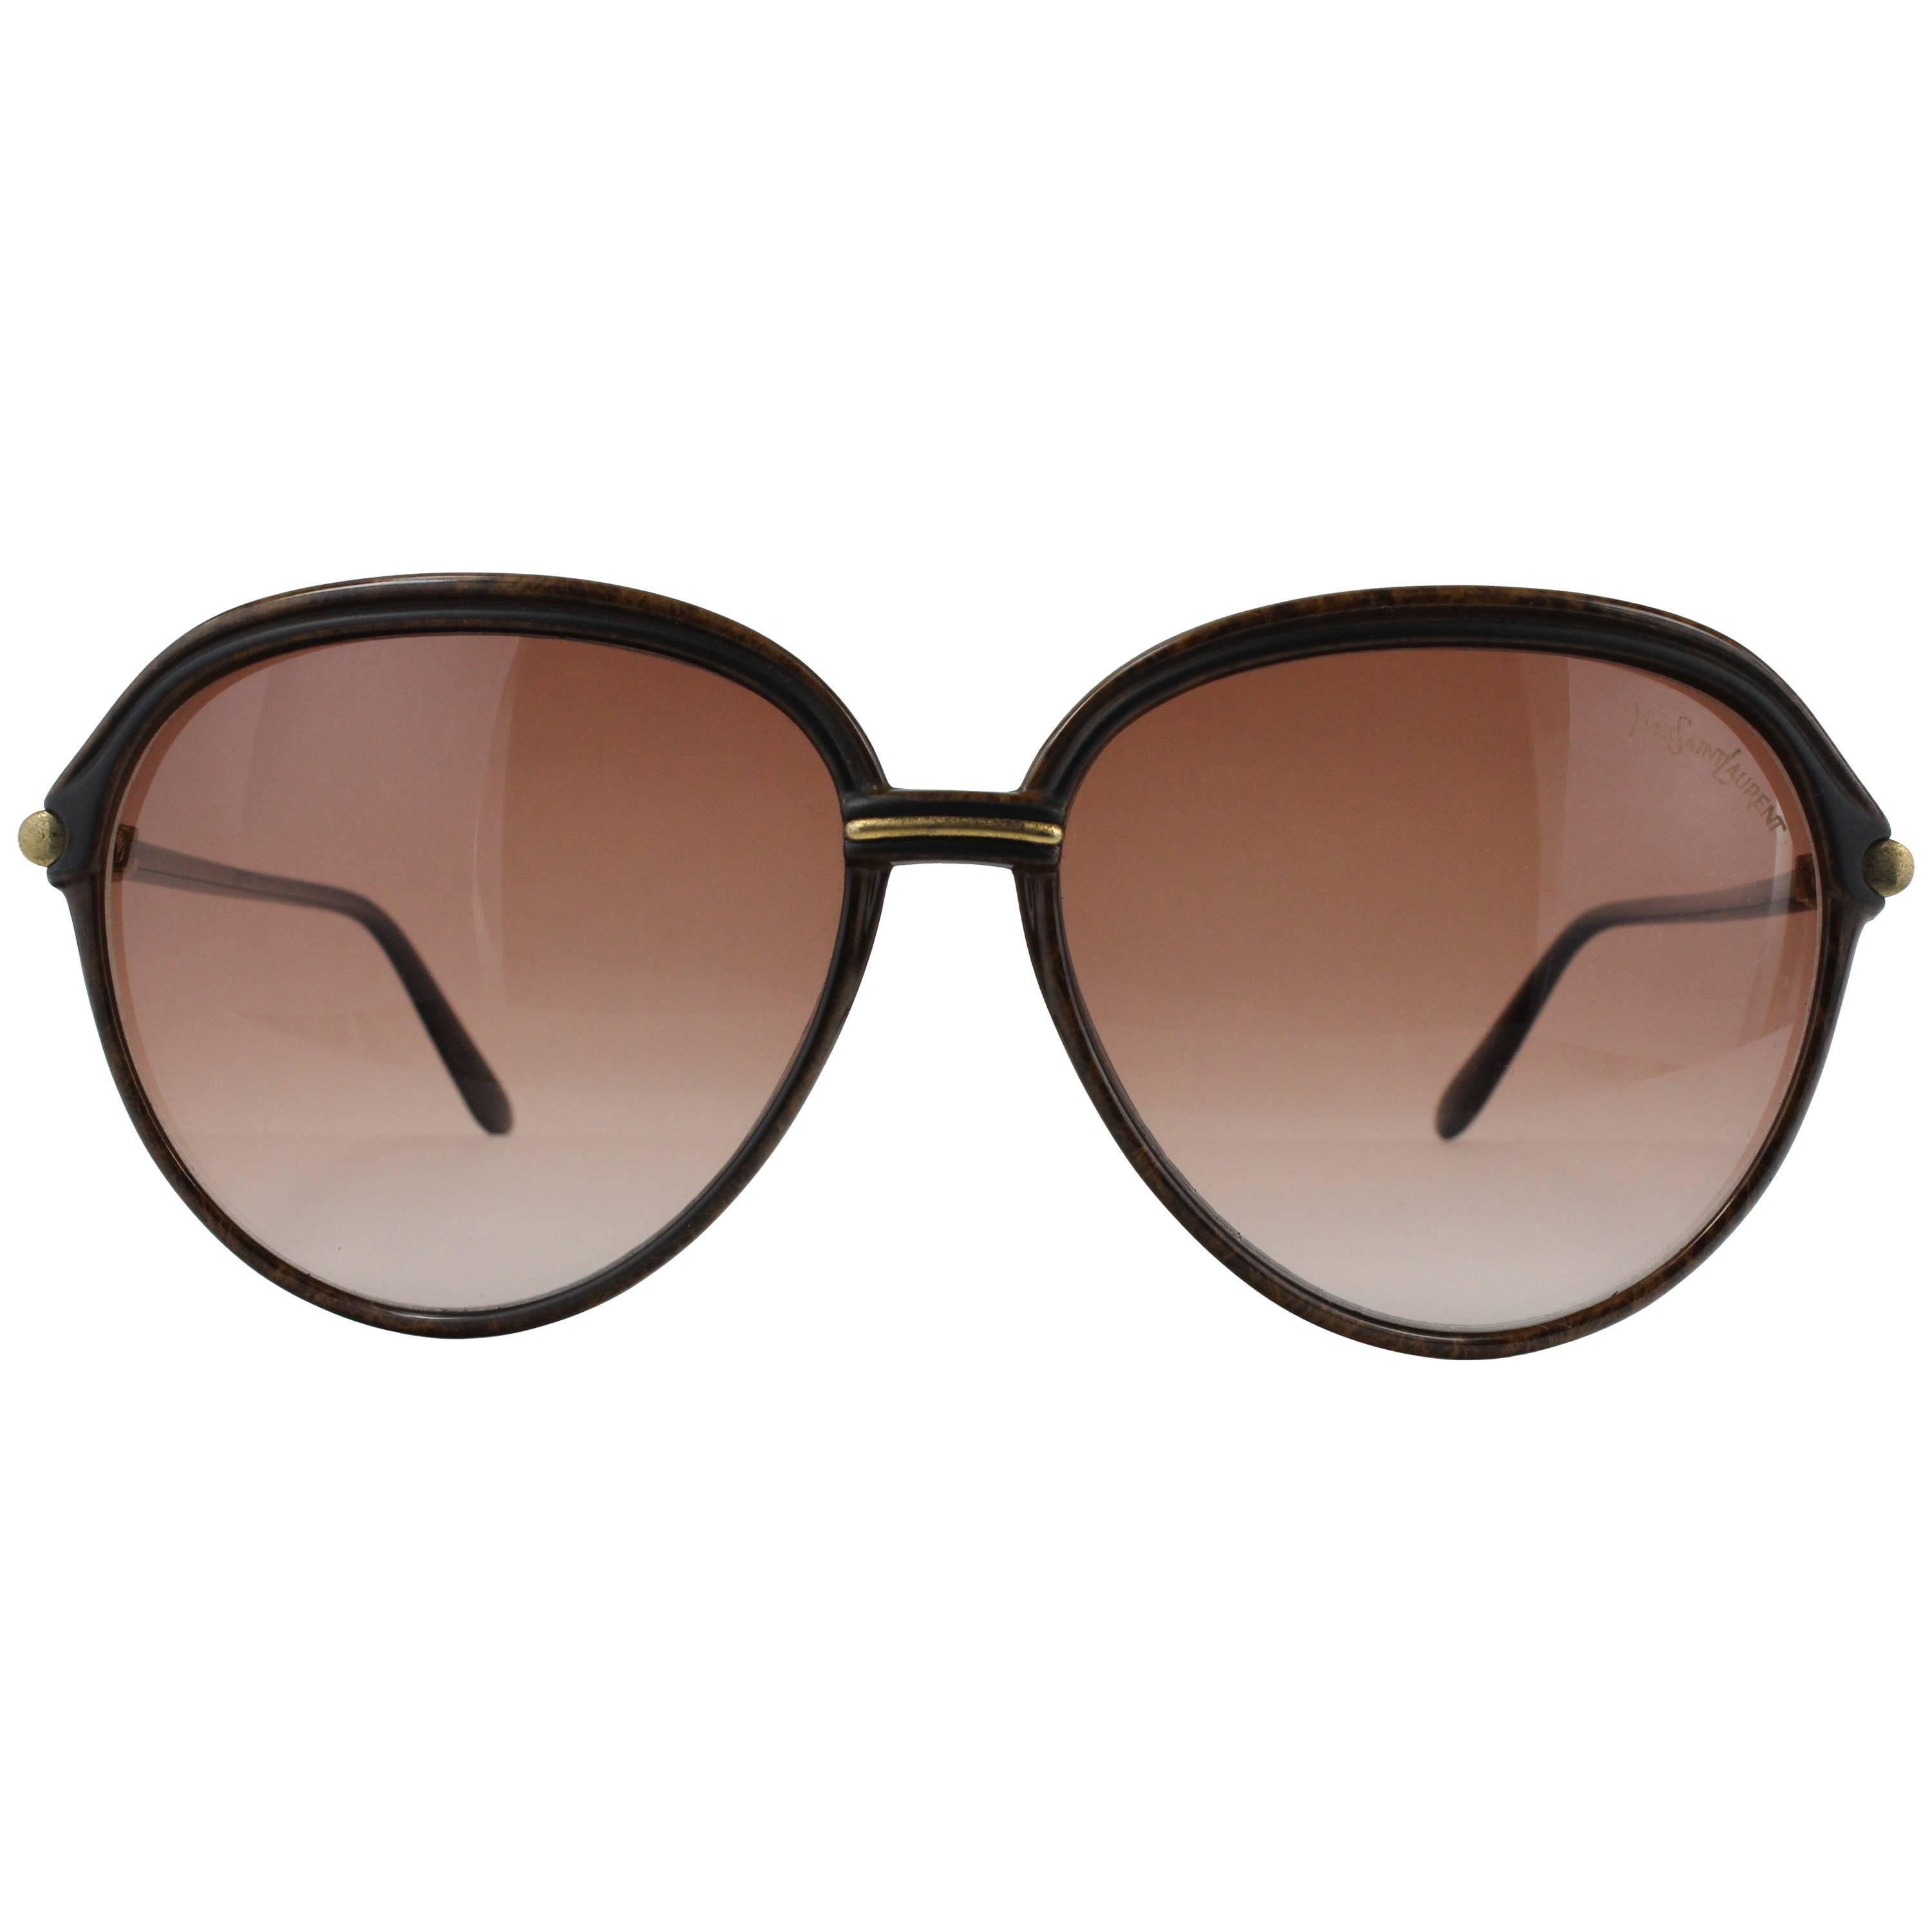 Yves Saint Laurent Sunglasses 8571-8, 1980s  For Sale